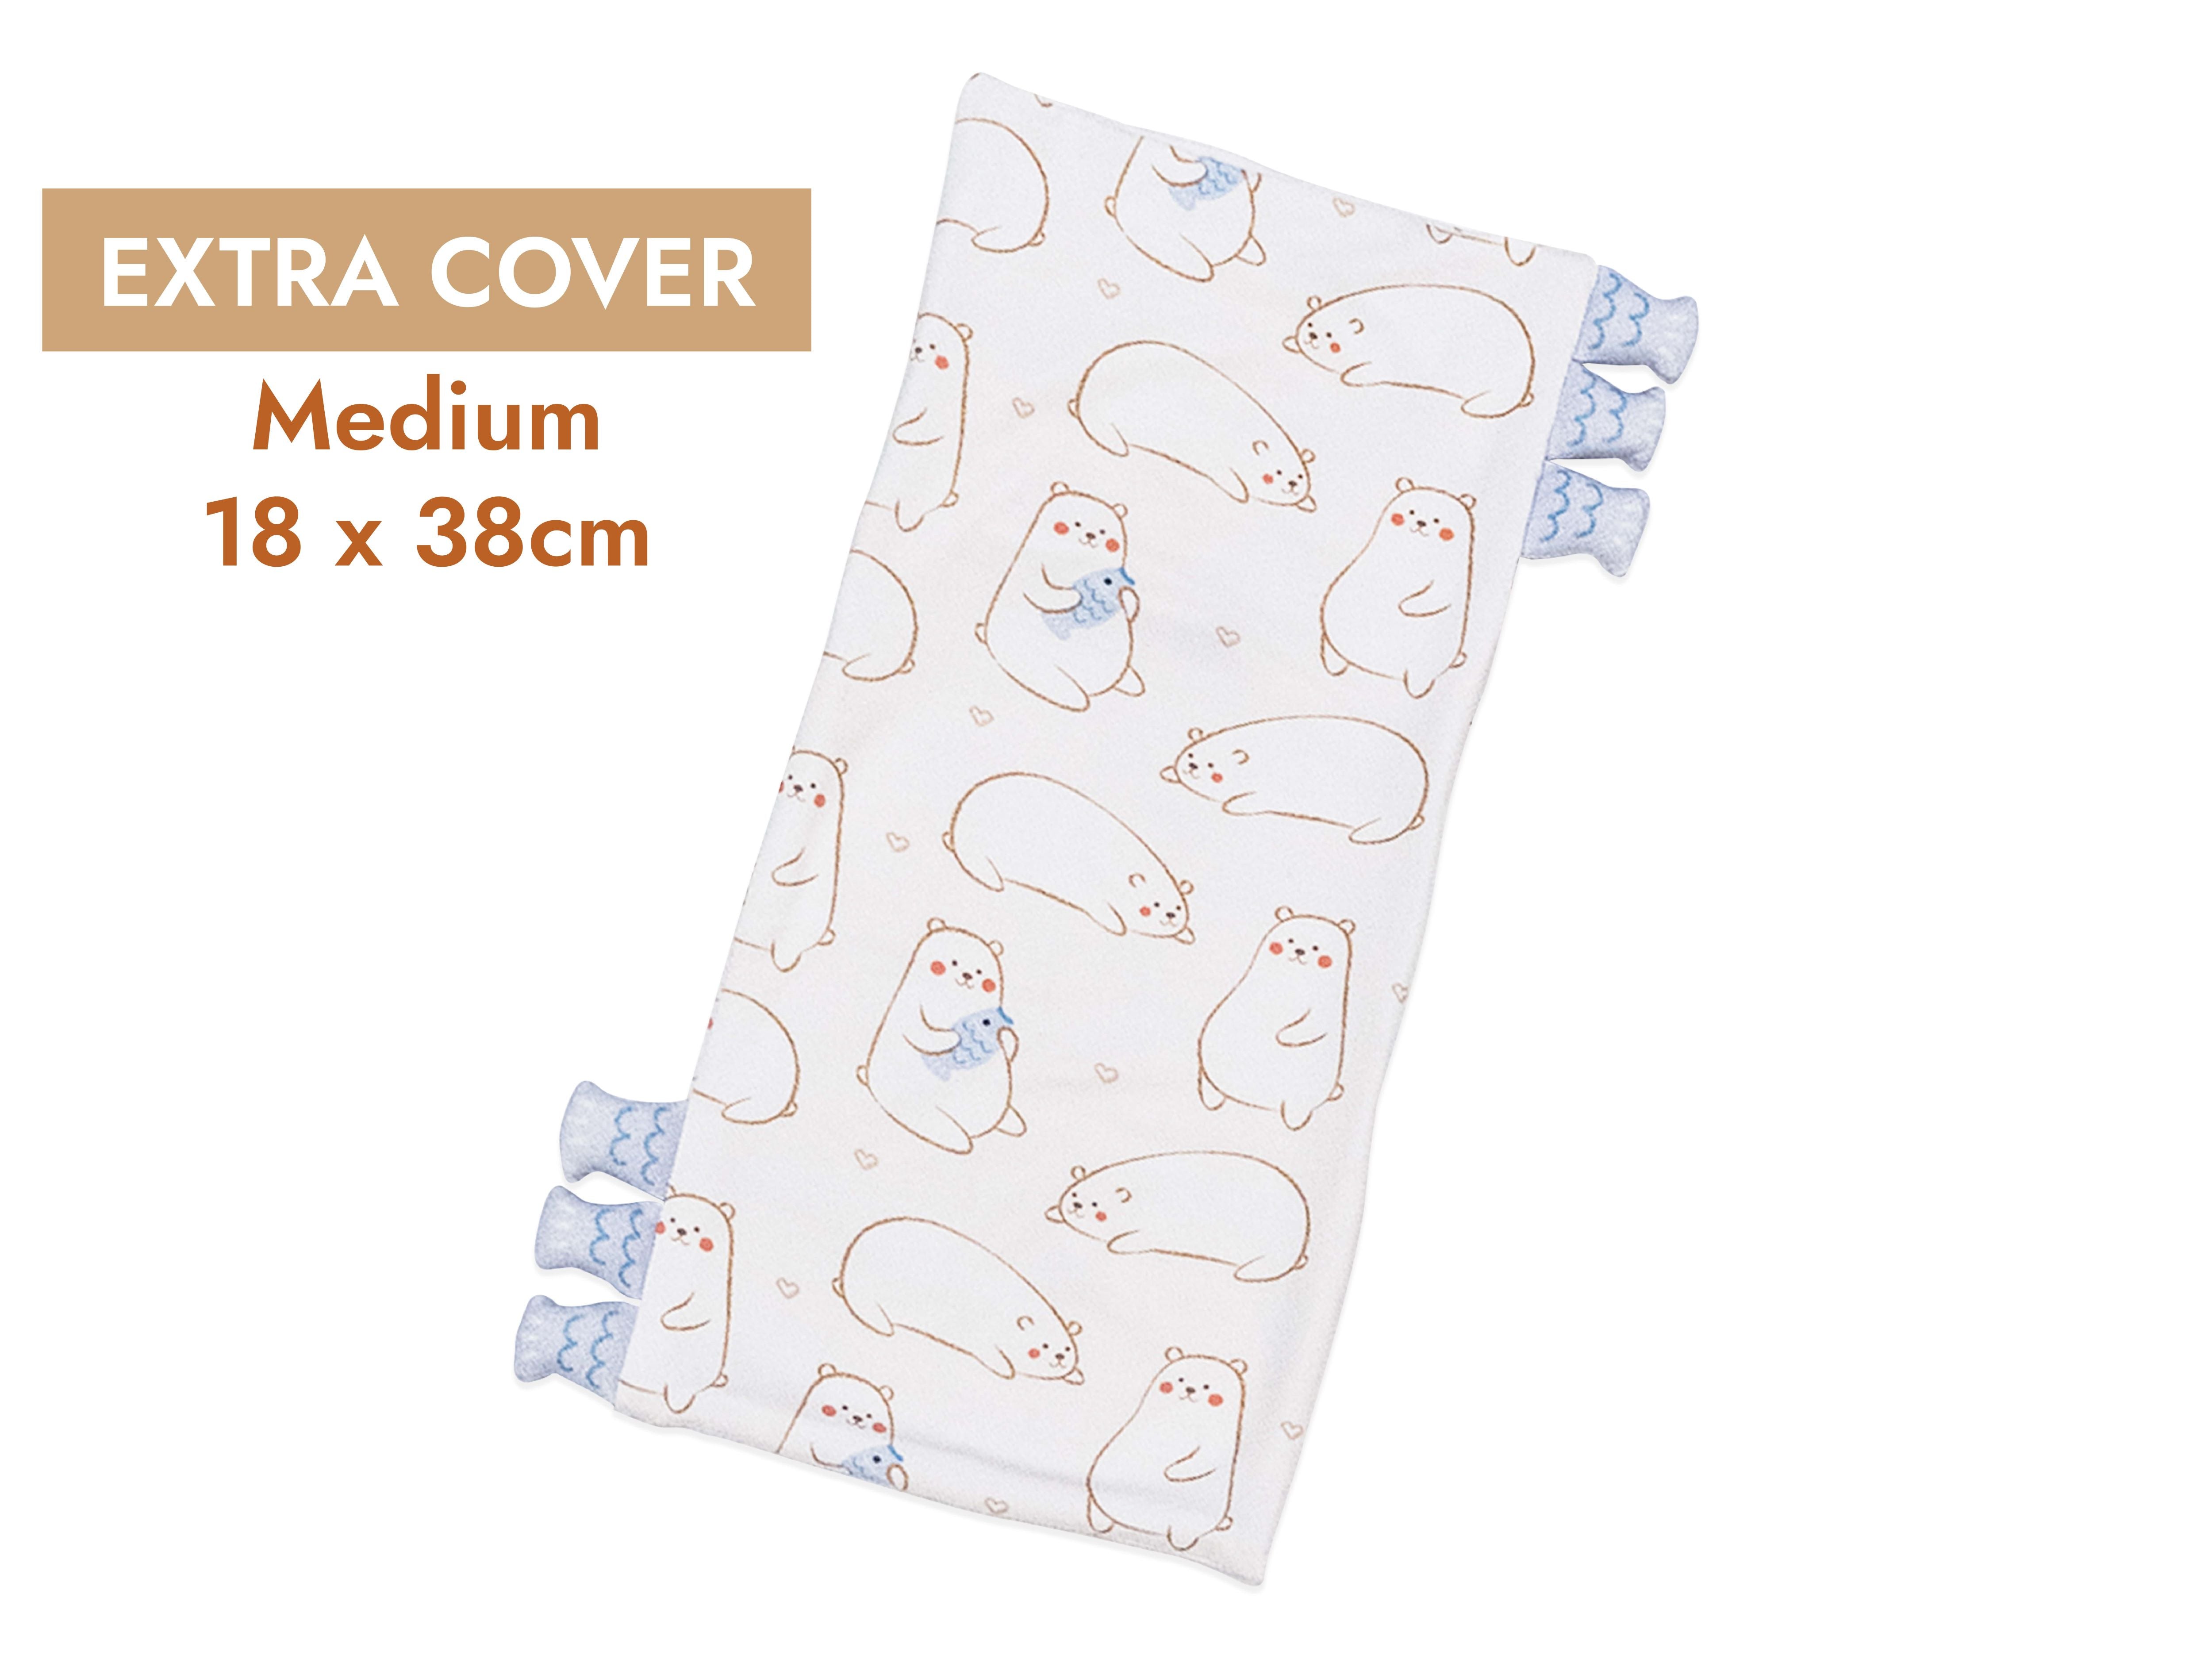 cho medium pillow extra cover in maru bear design